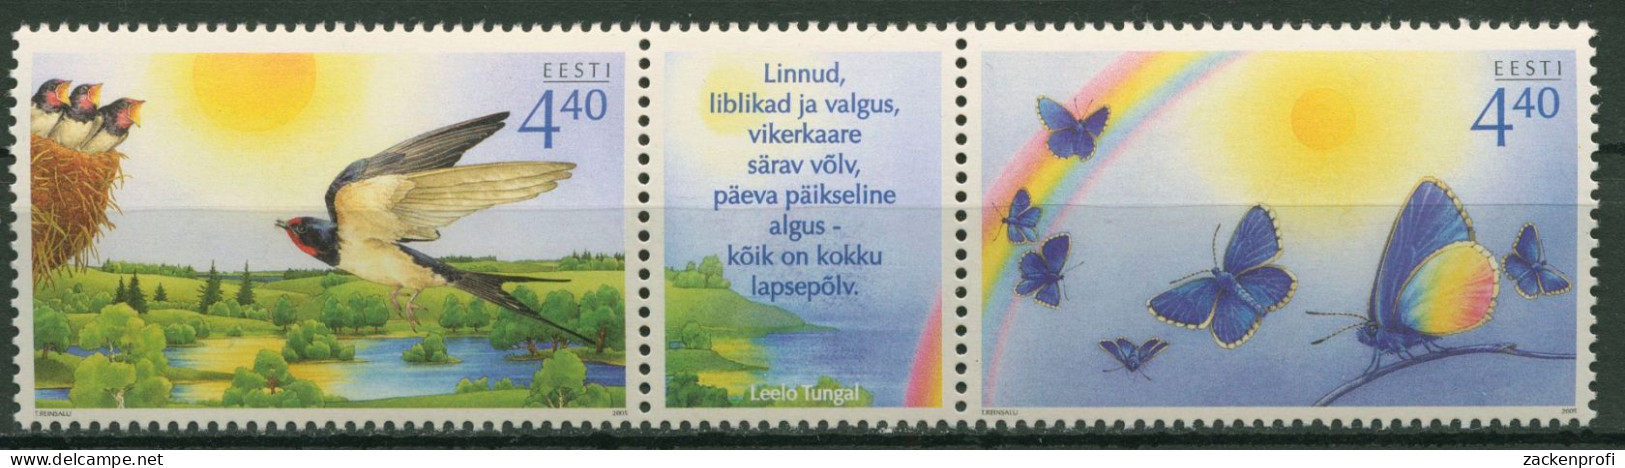 Estland 2005 Internationaler Kindertag 518/19 ZD Postfrisch (C73742) - Estonia